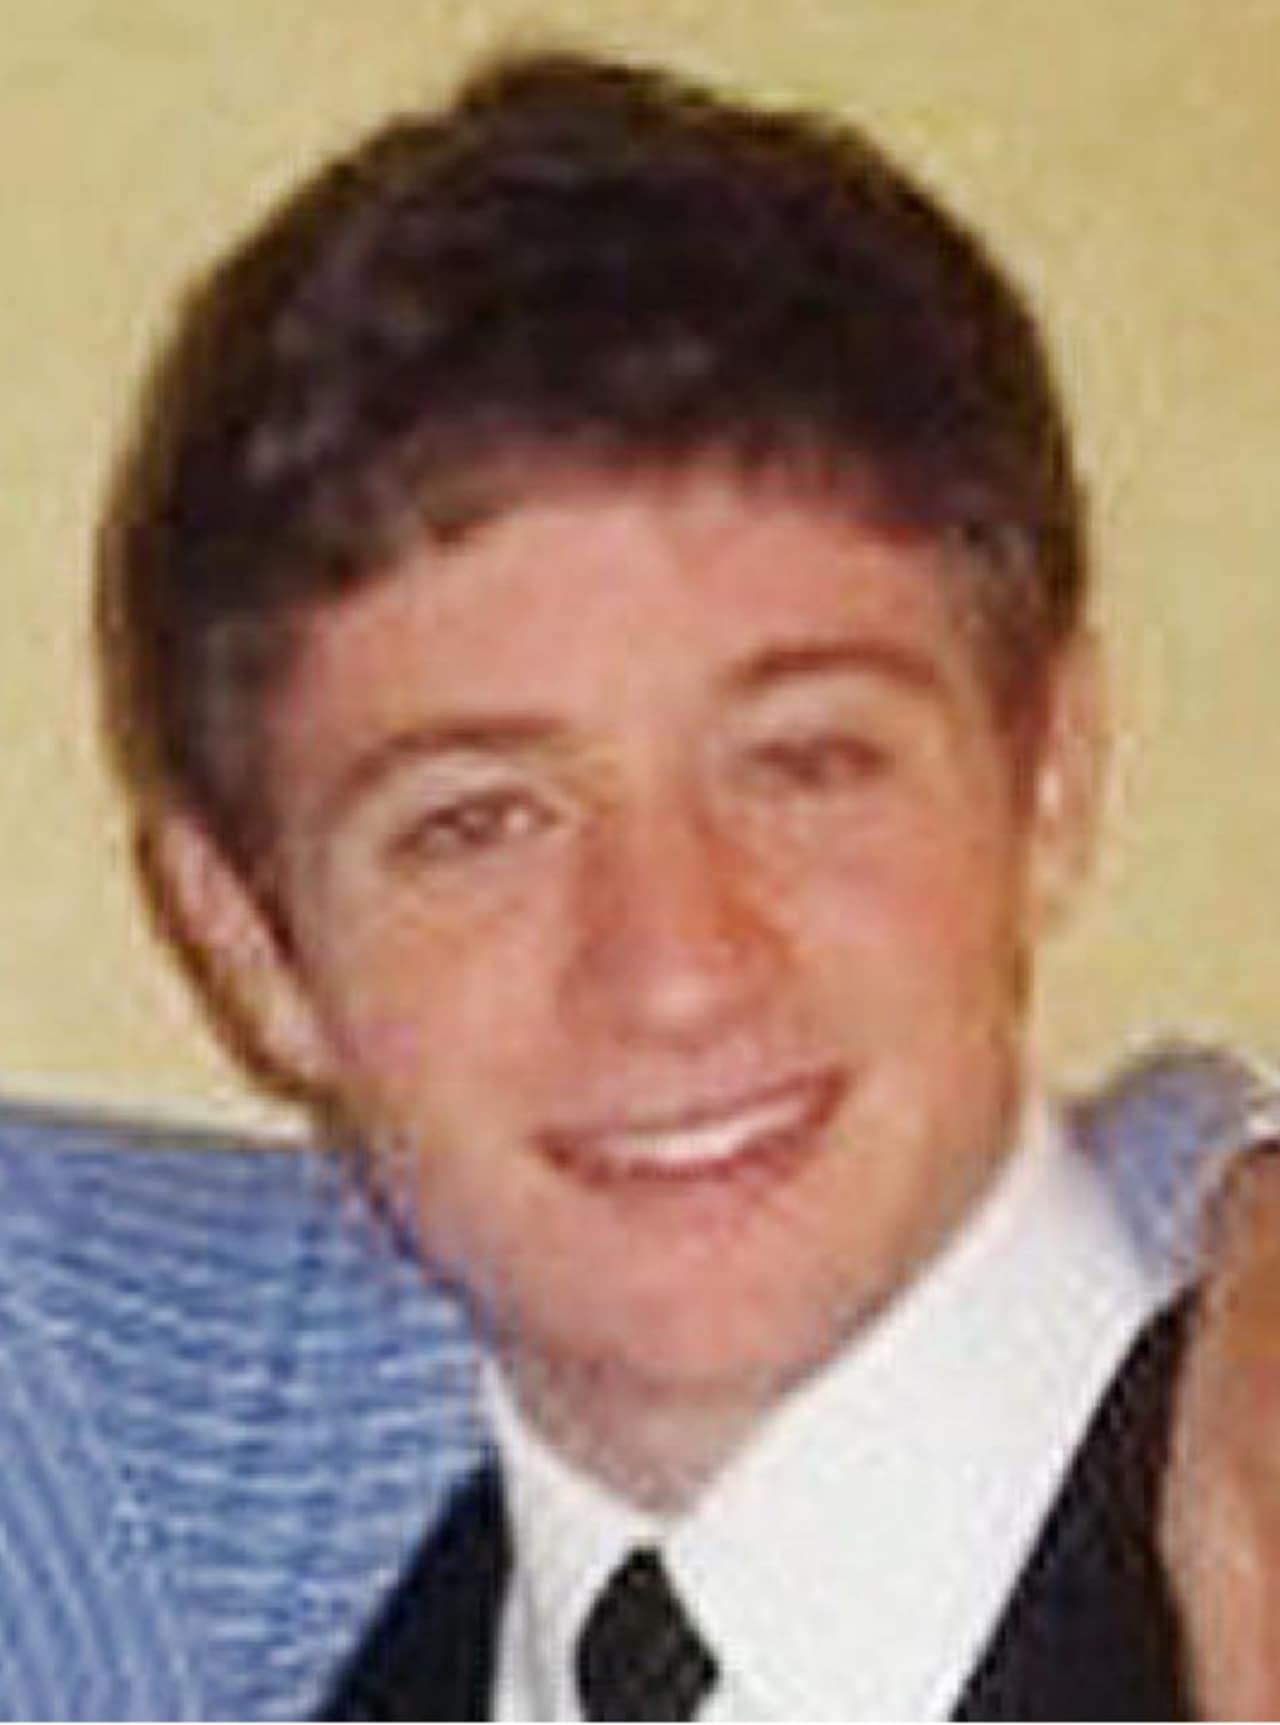 Evan Lieberman, 19, of Chappaqua died in a June 2011 accident.